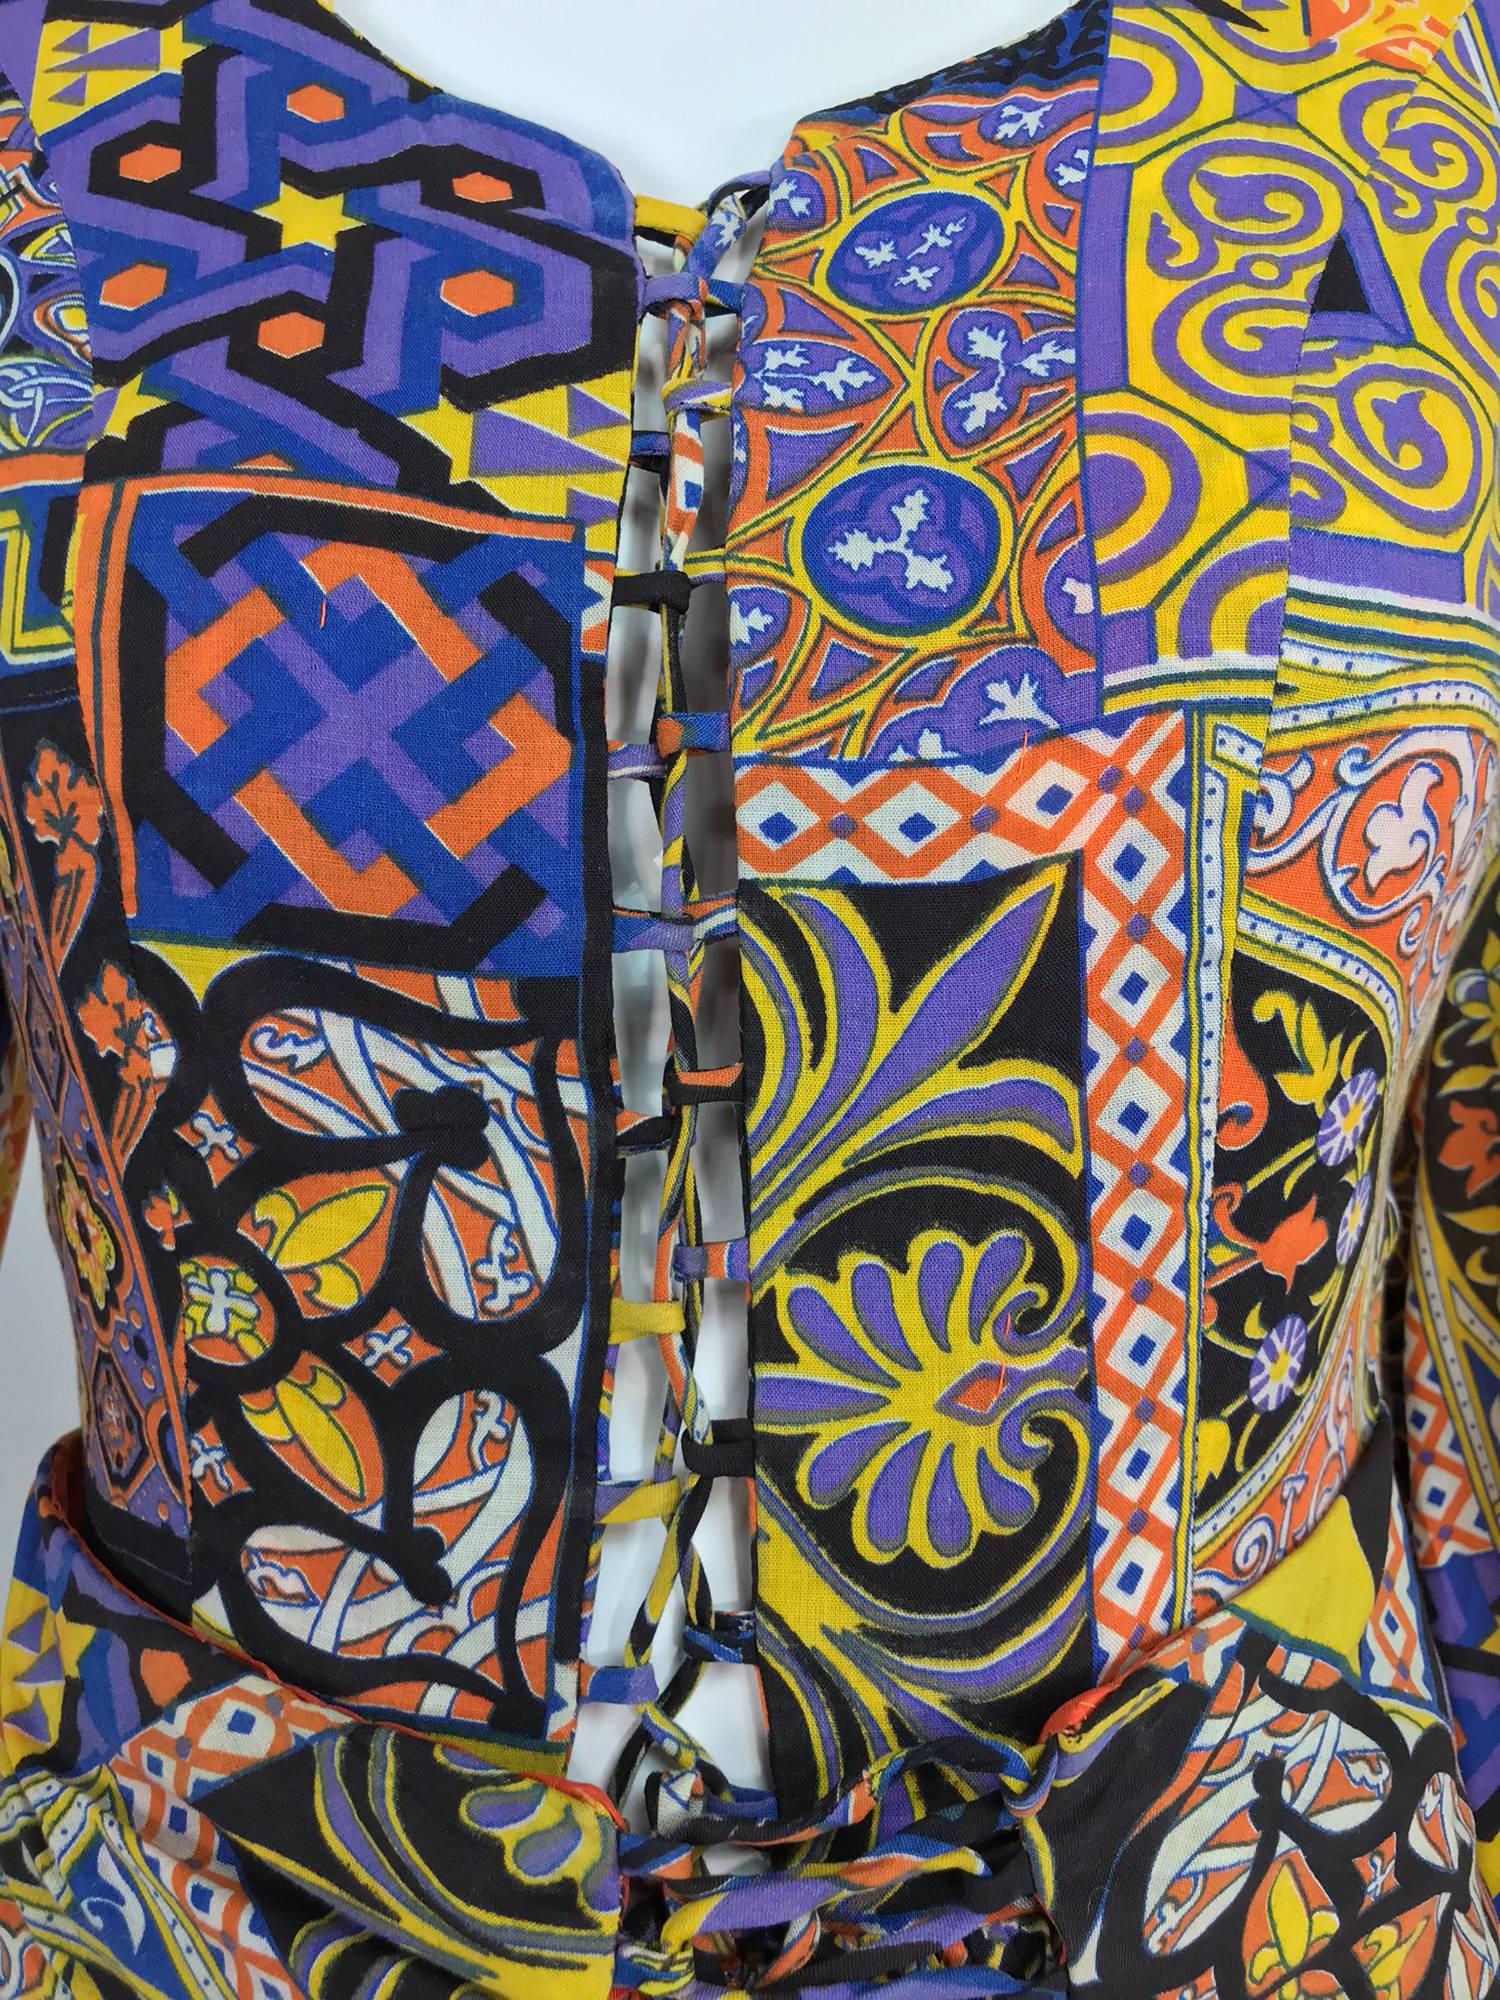 Black Moorish mosaic cotton print laced front bohemian dress 1960s